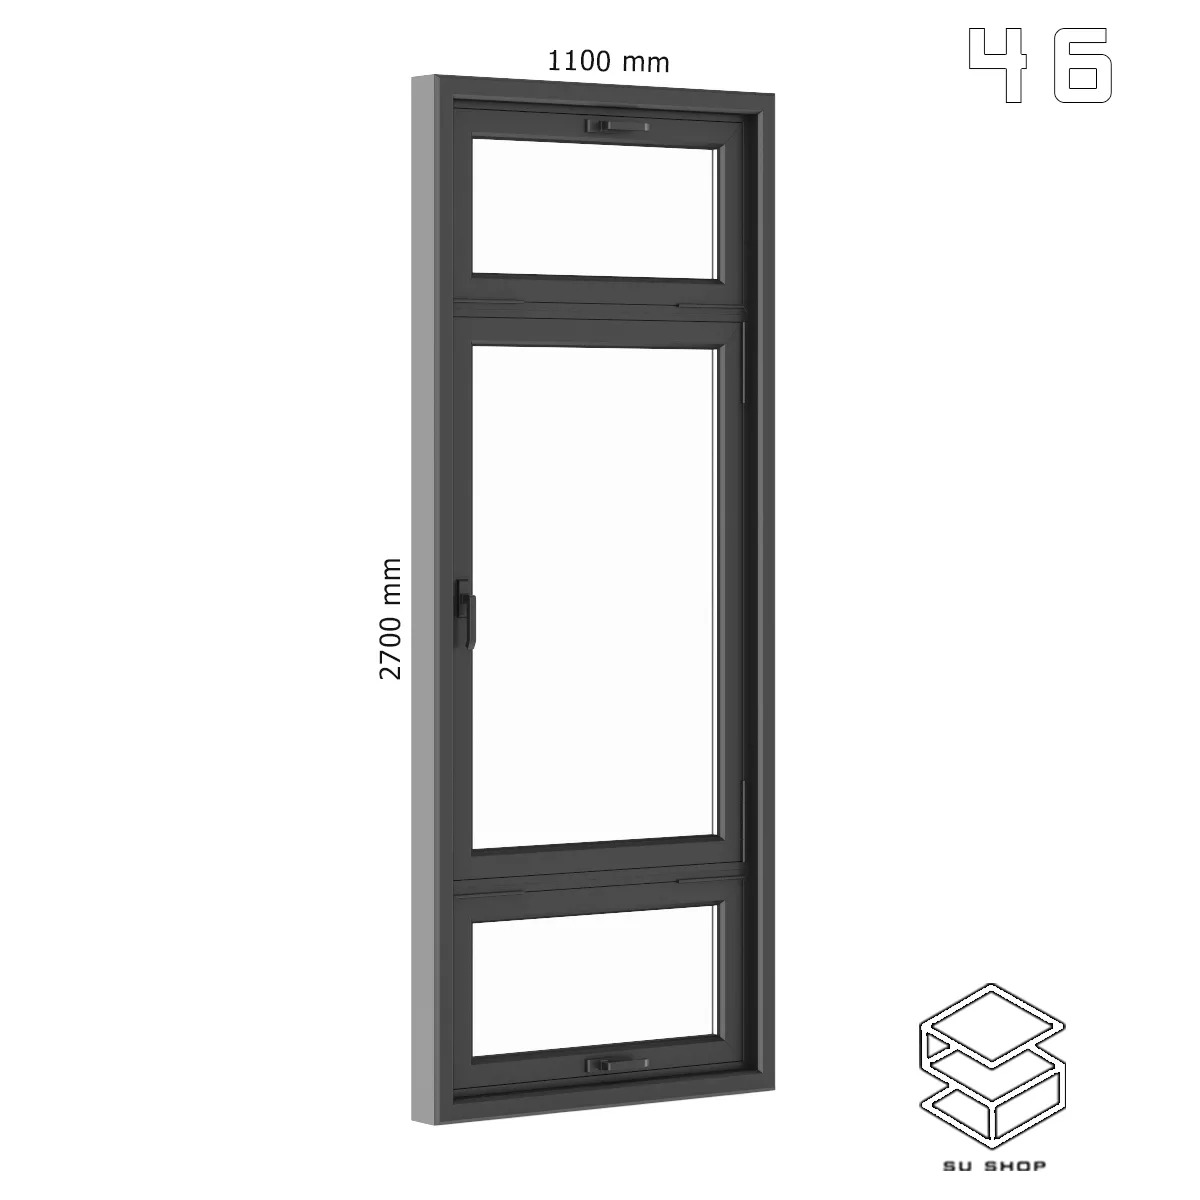 MODERN WINDOWS - SKETCHUP 3D MODEL - VRAY OR ENSCAPE - ID16788